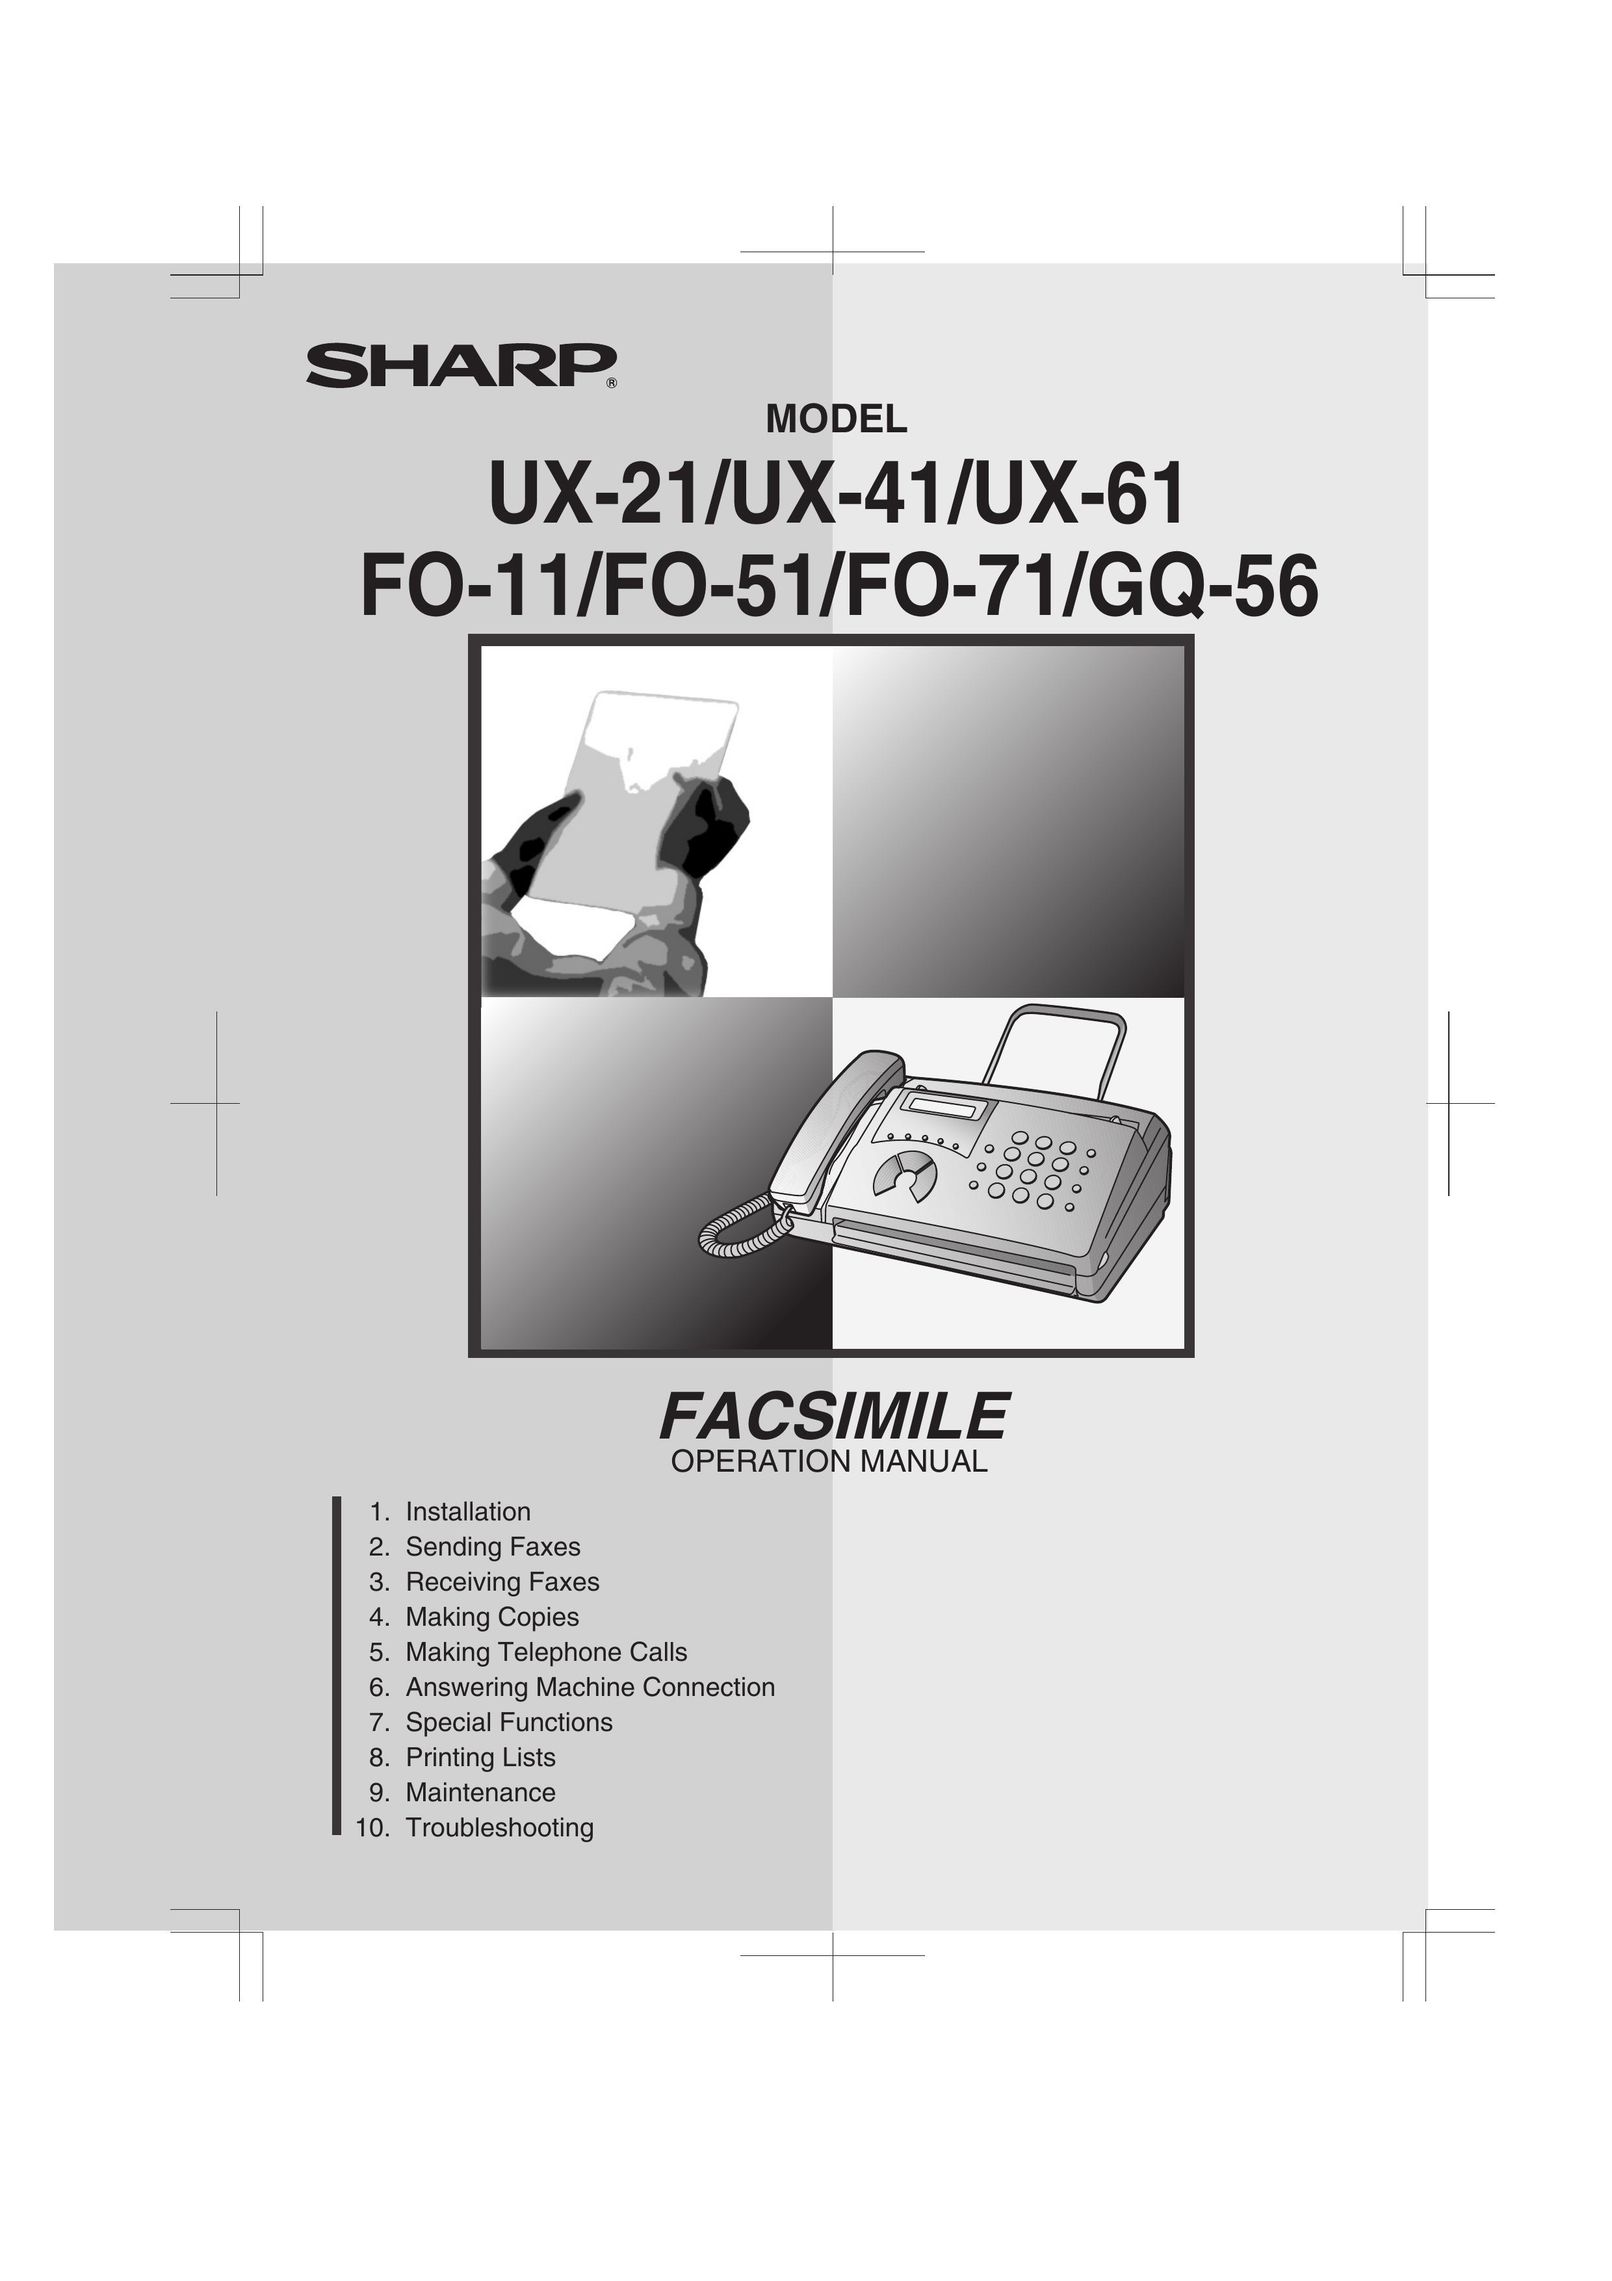 Sharp FO-51 Fax Machine User Manual